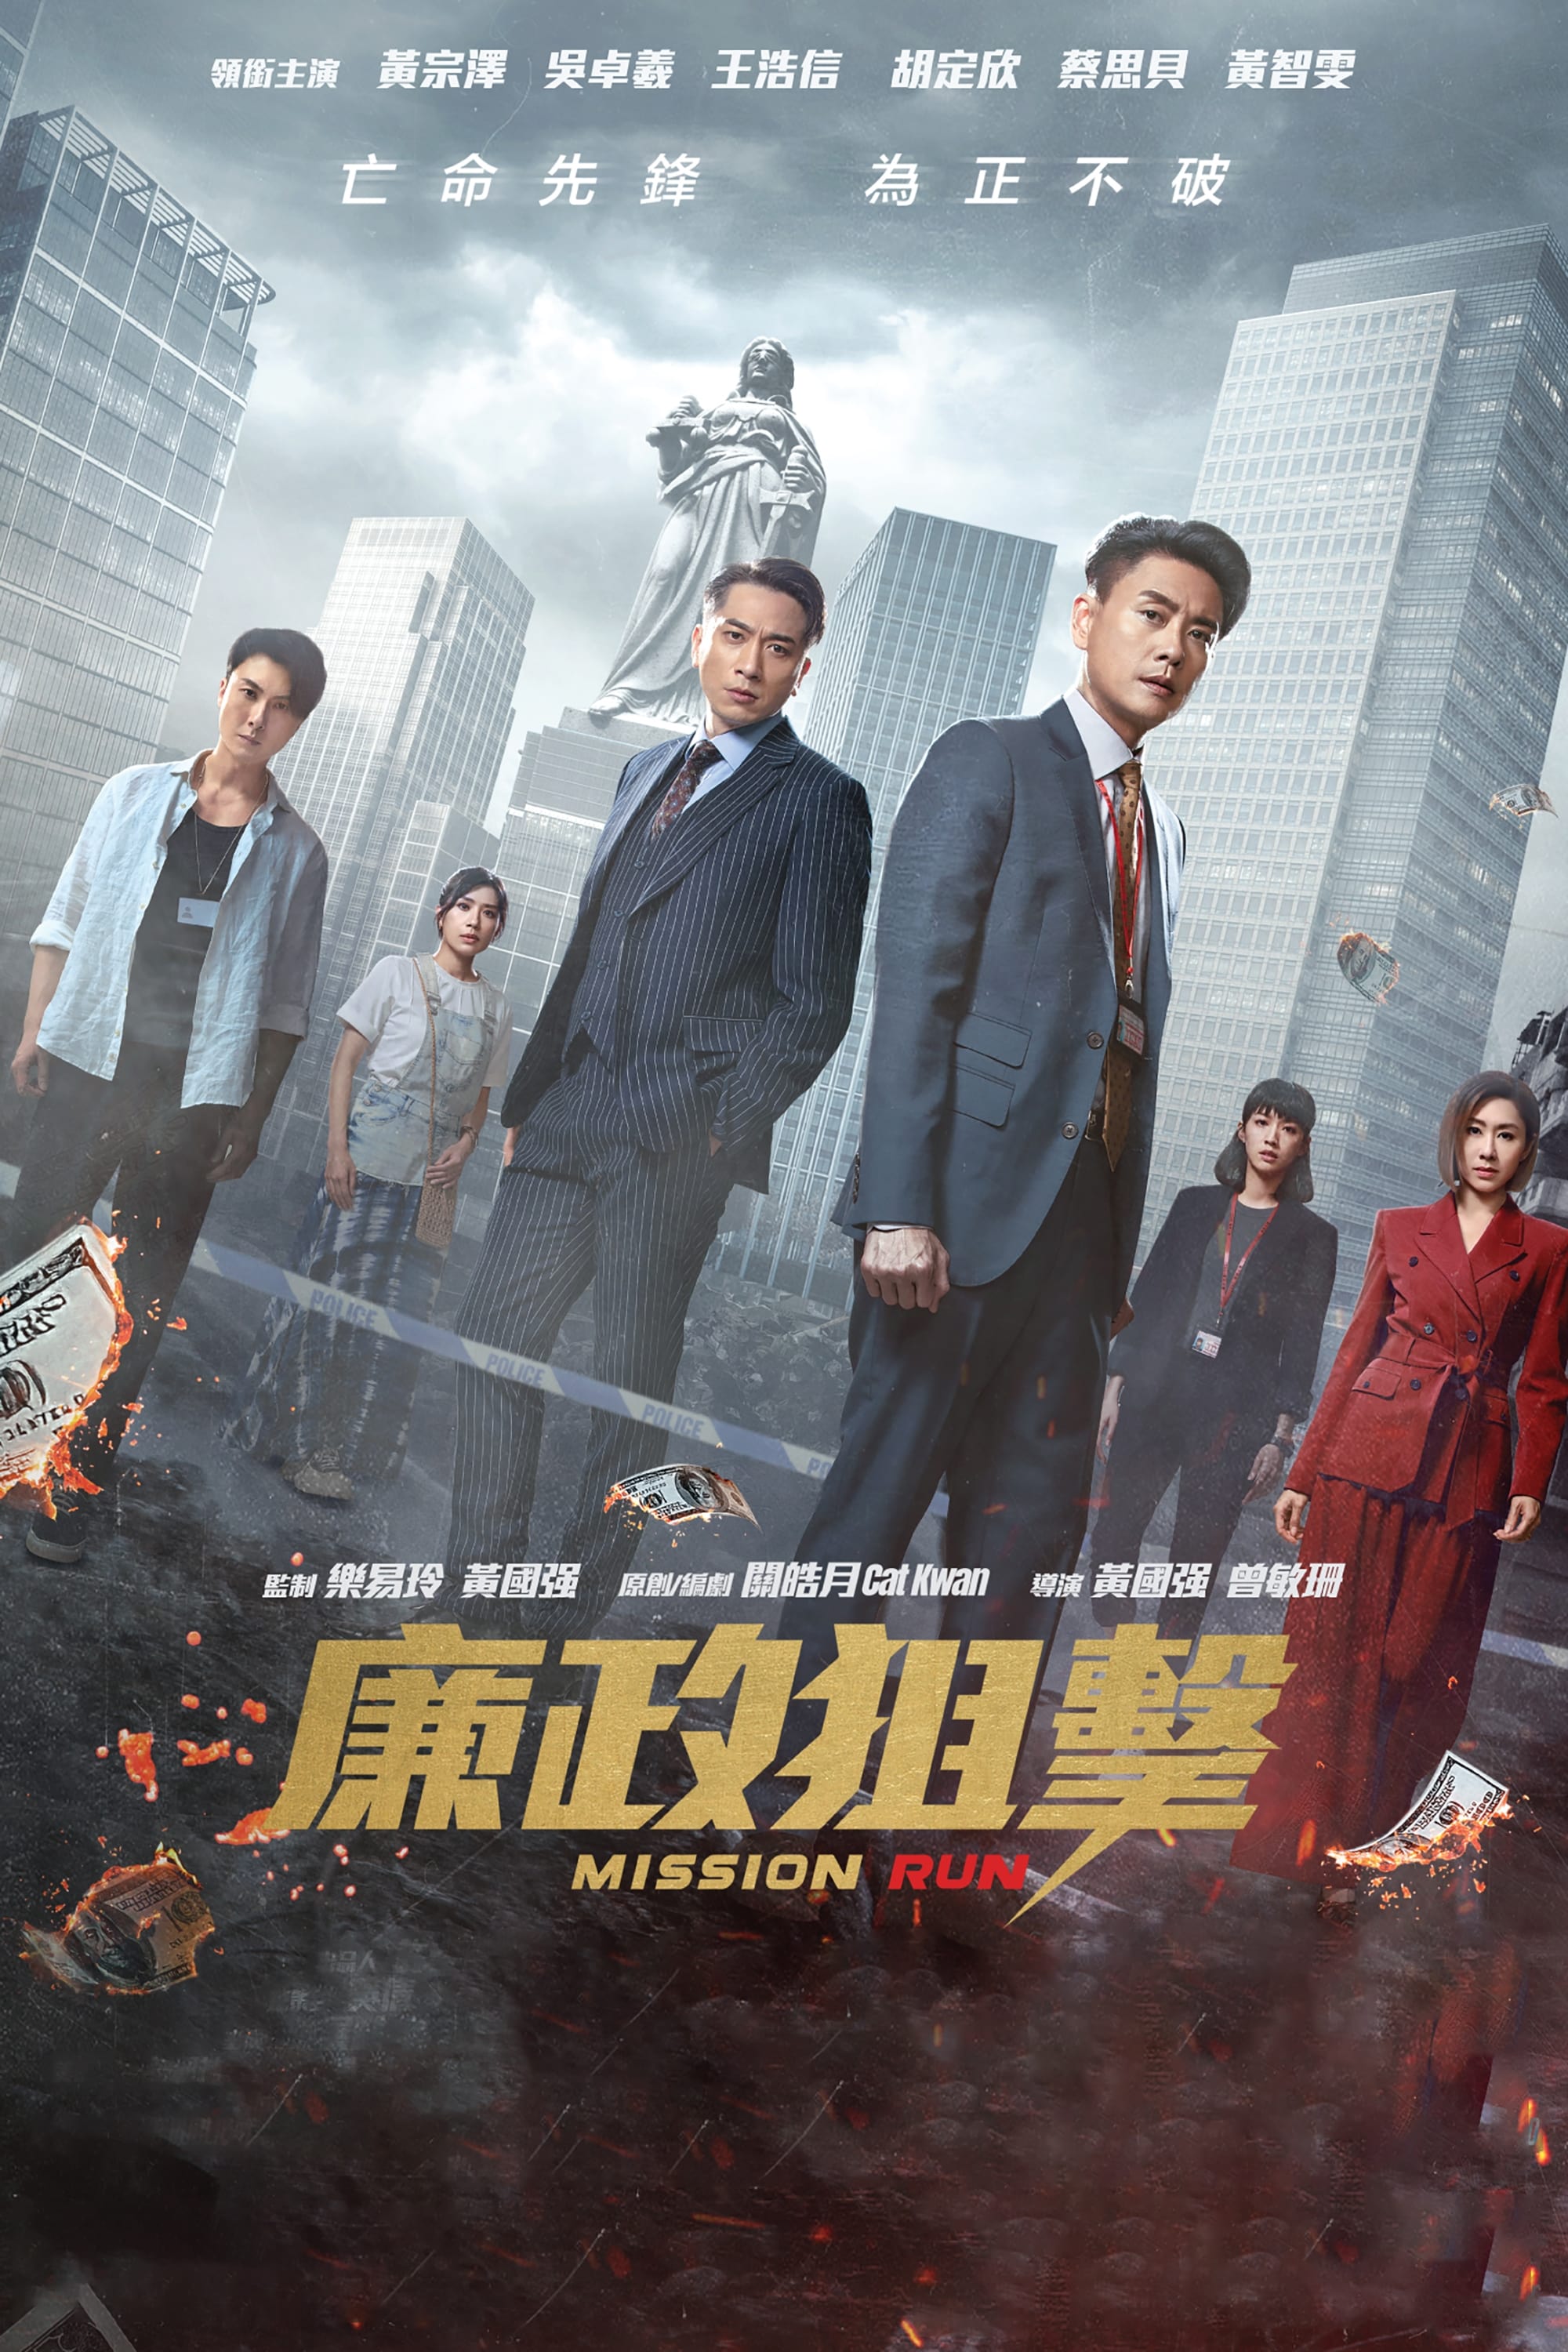 TV ratings for Mission Run (廉政狙擊) in India. TVB Jade TV series